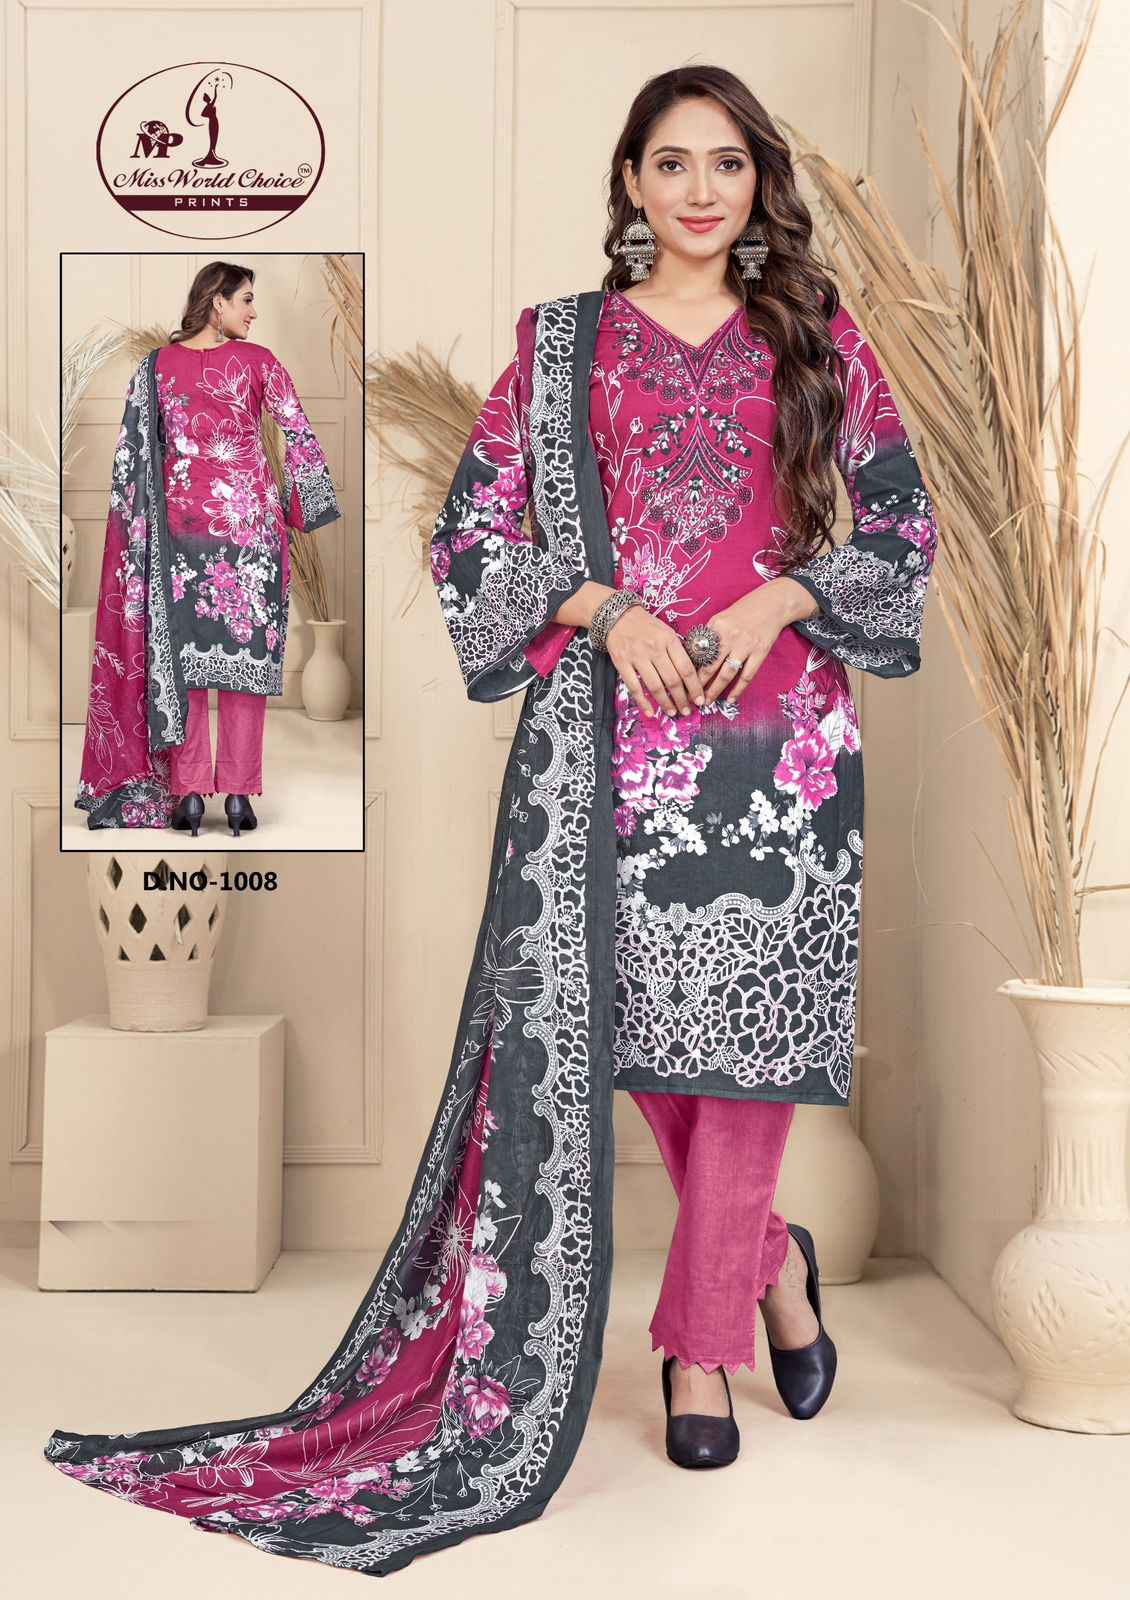 Missworld Choice Print Mahenoor Luxury Lawn Dress Material (8 Pc Catalog)